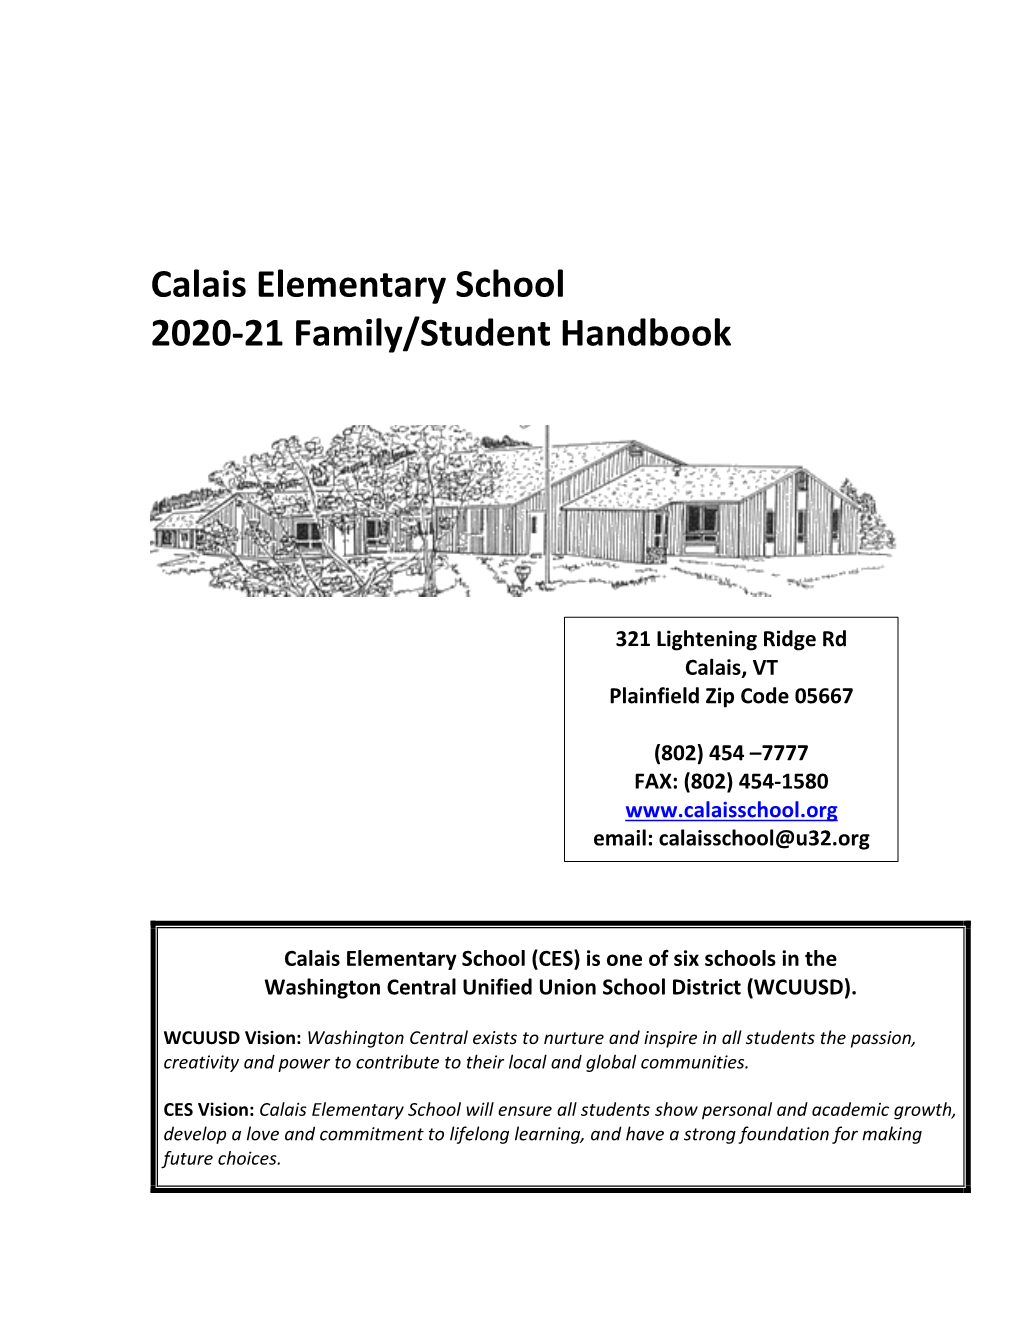 Calais Elementary School 2020-21 Family/Student Handbook